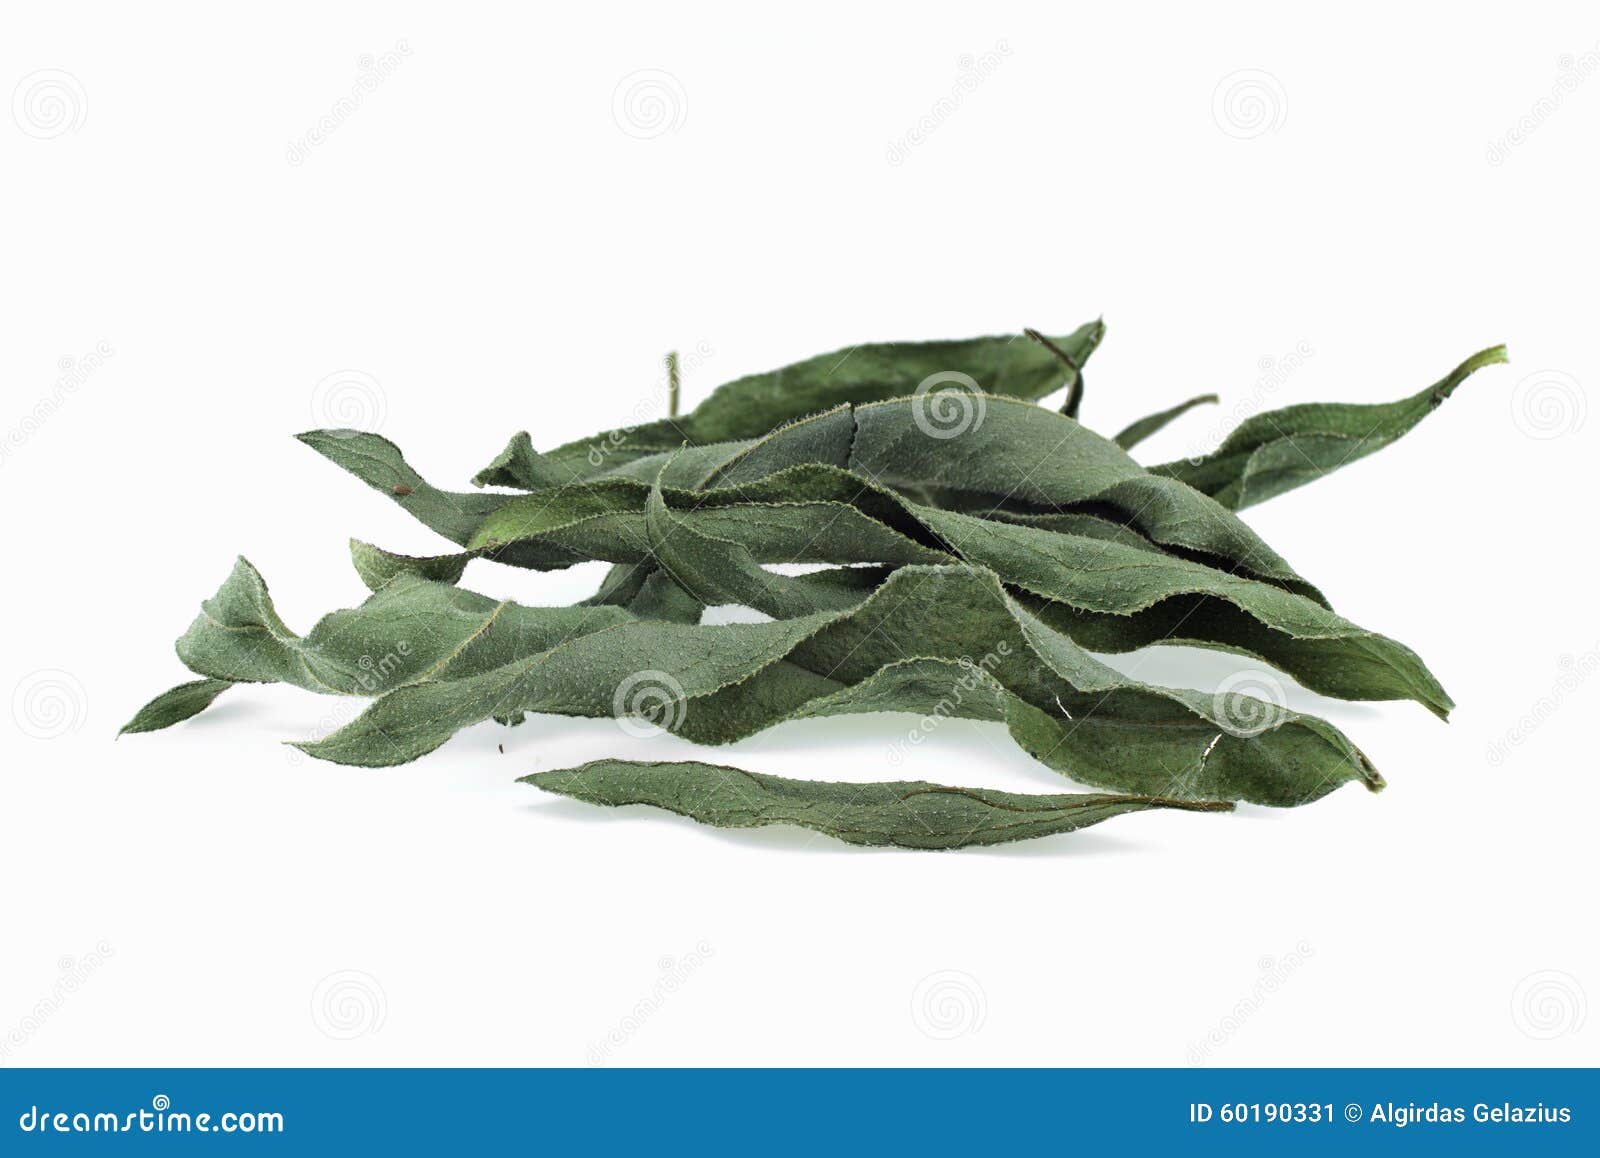 arnica herb dried leaves